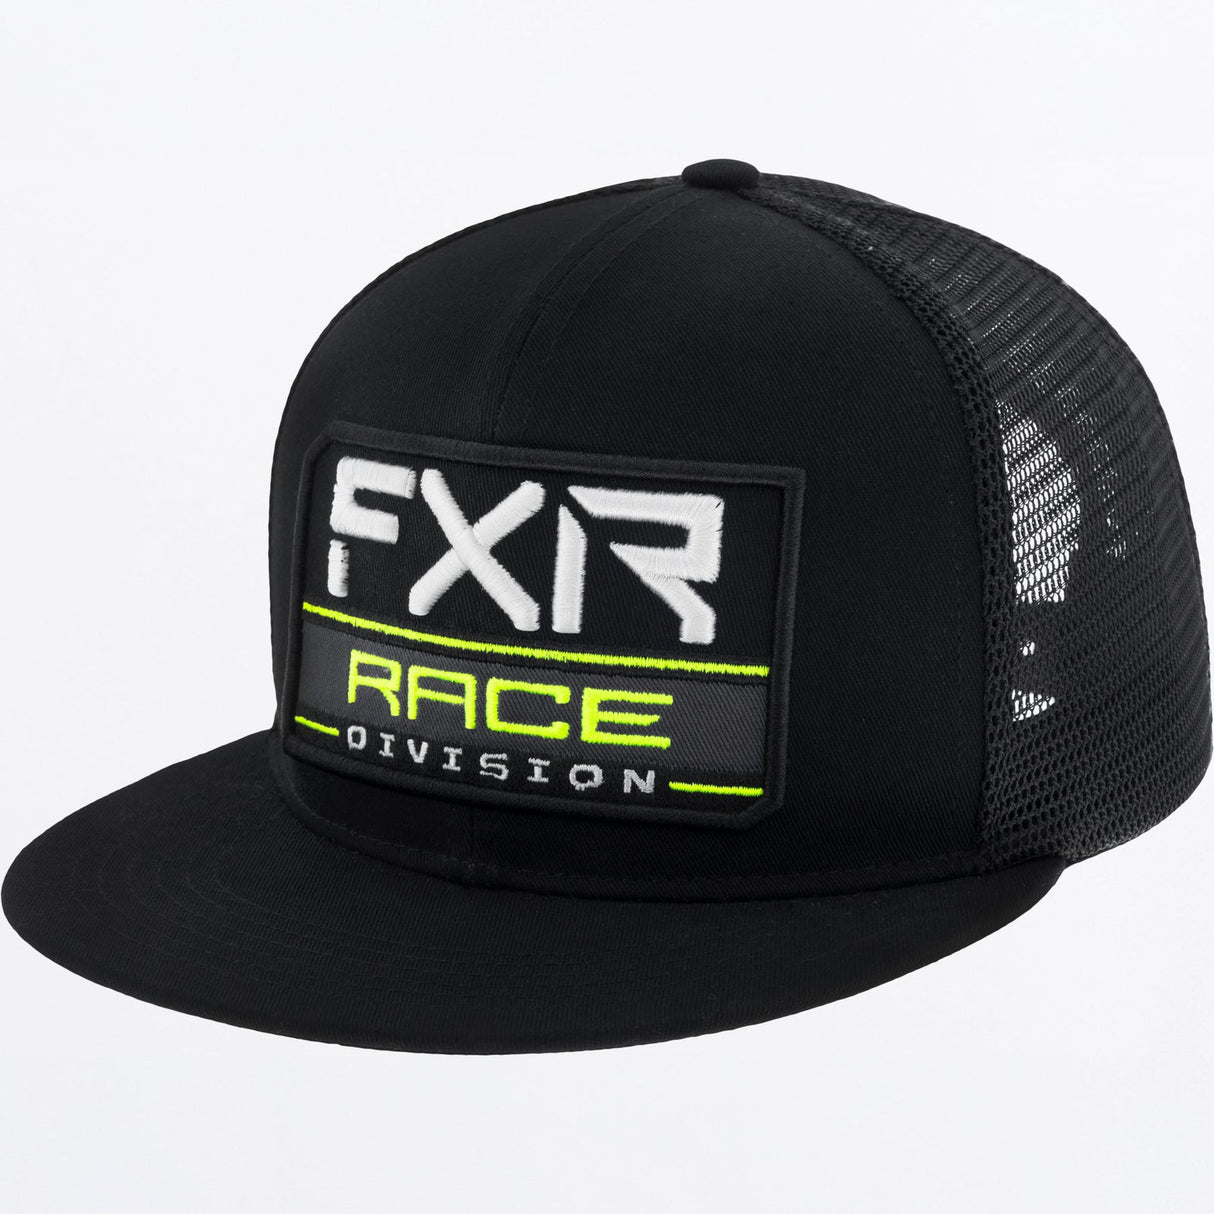 FXR RACE DIV HAT ADULT